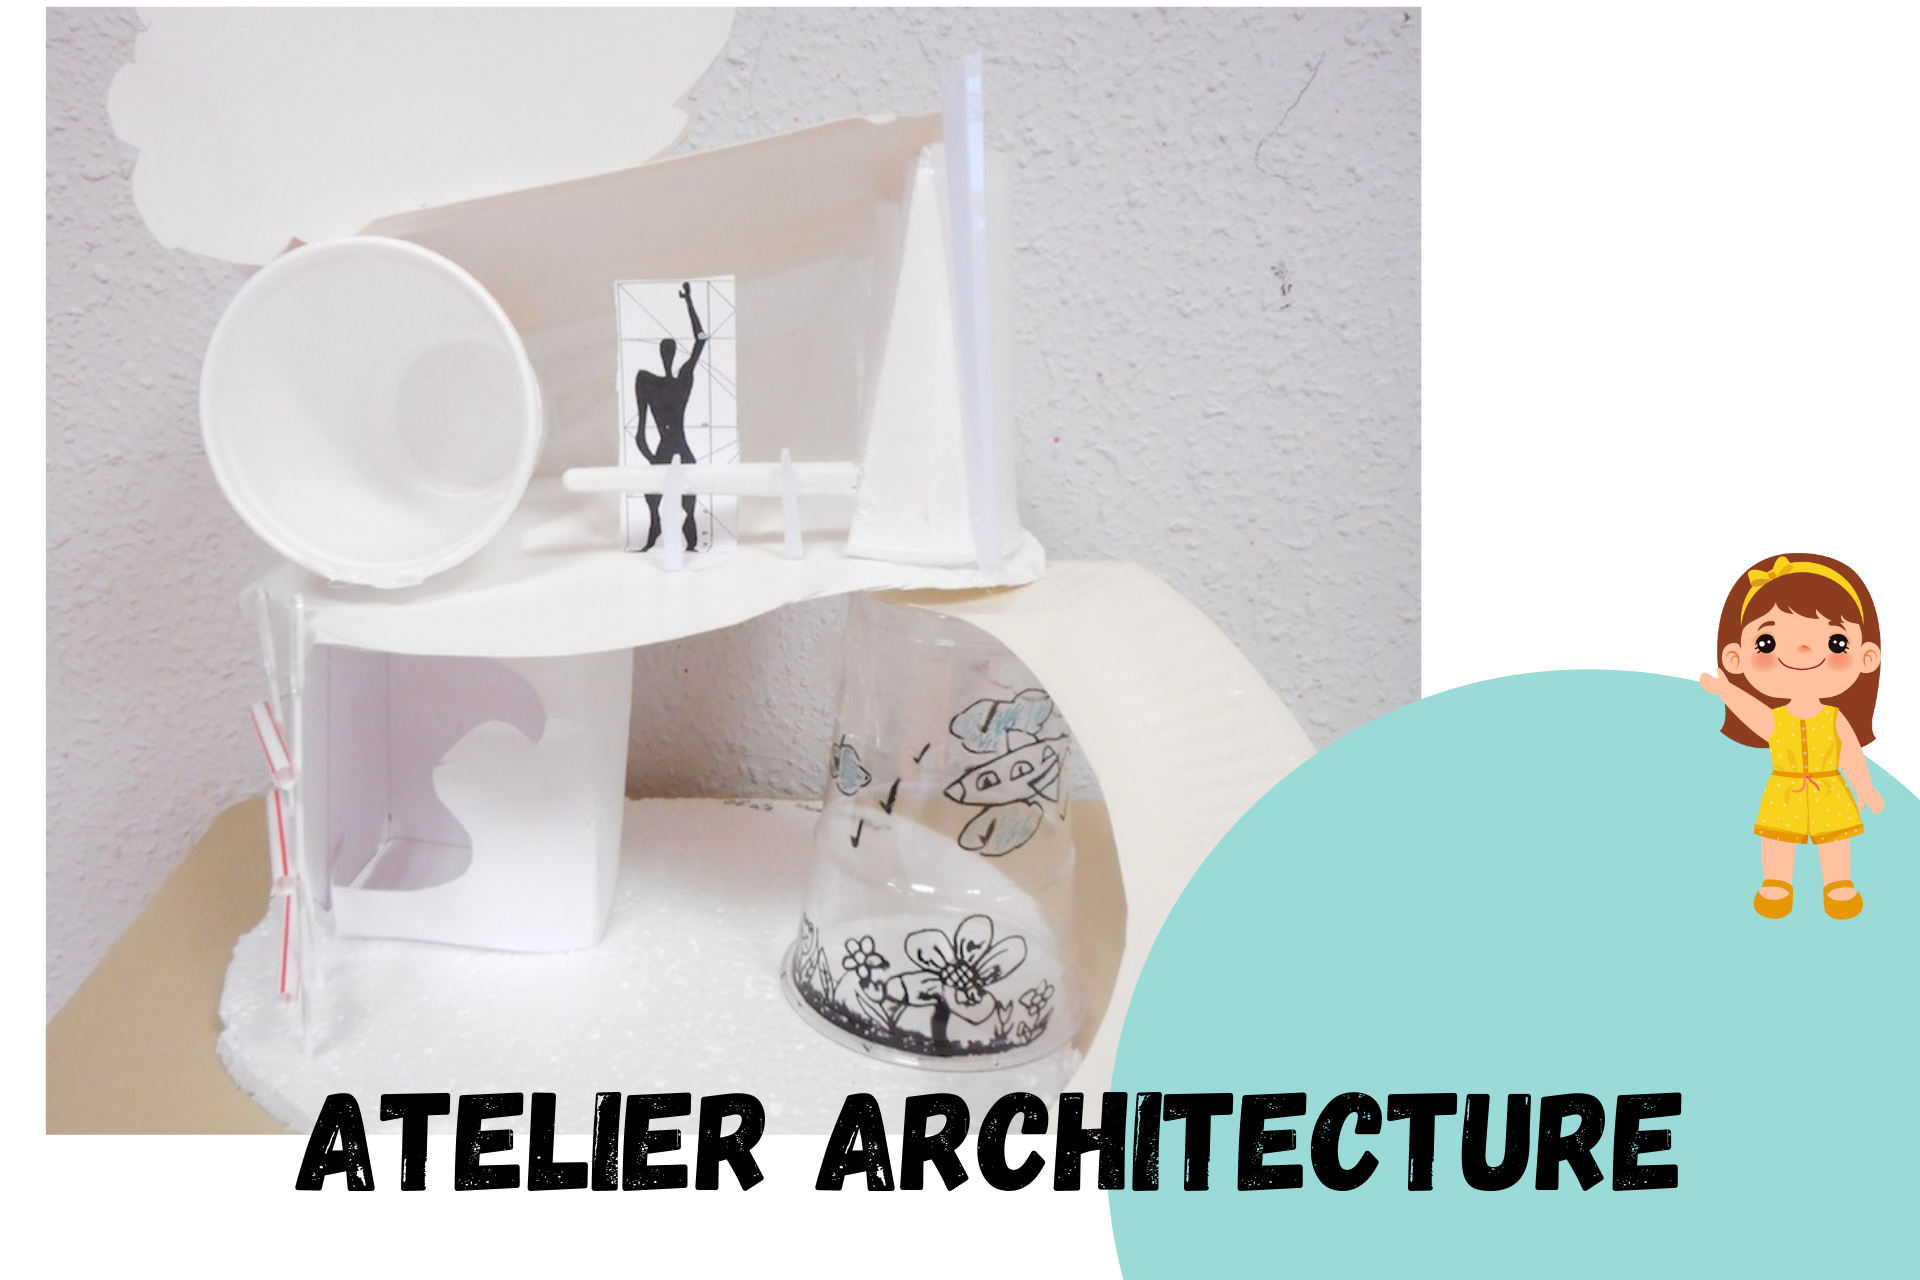 Atelier architecture